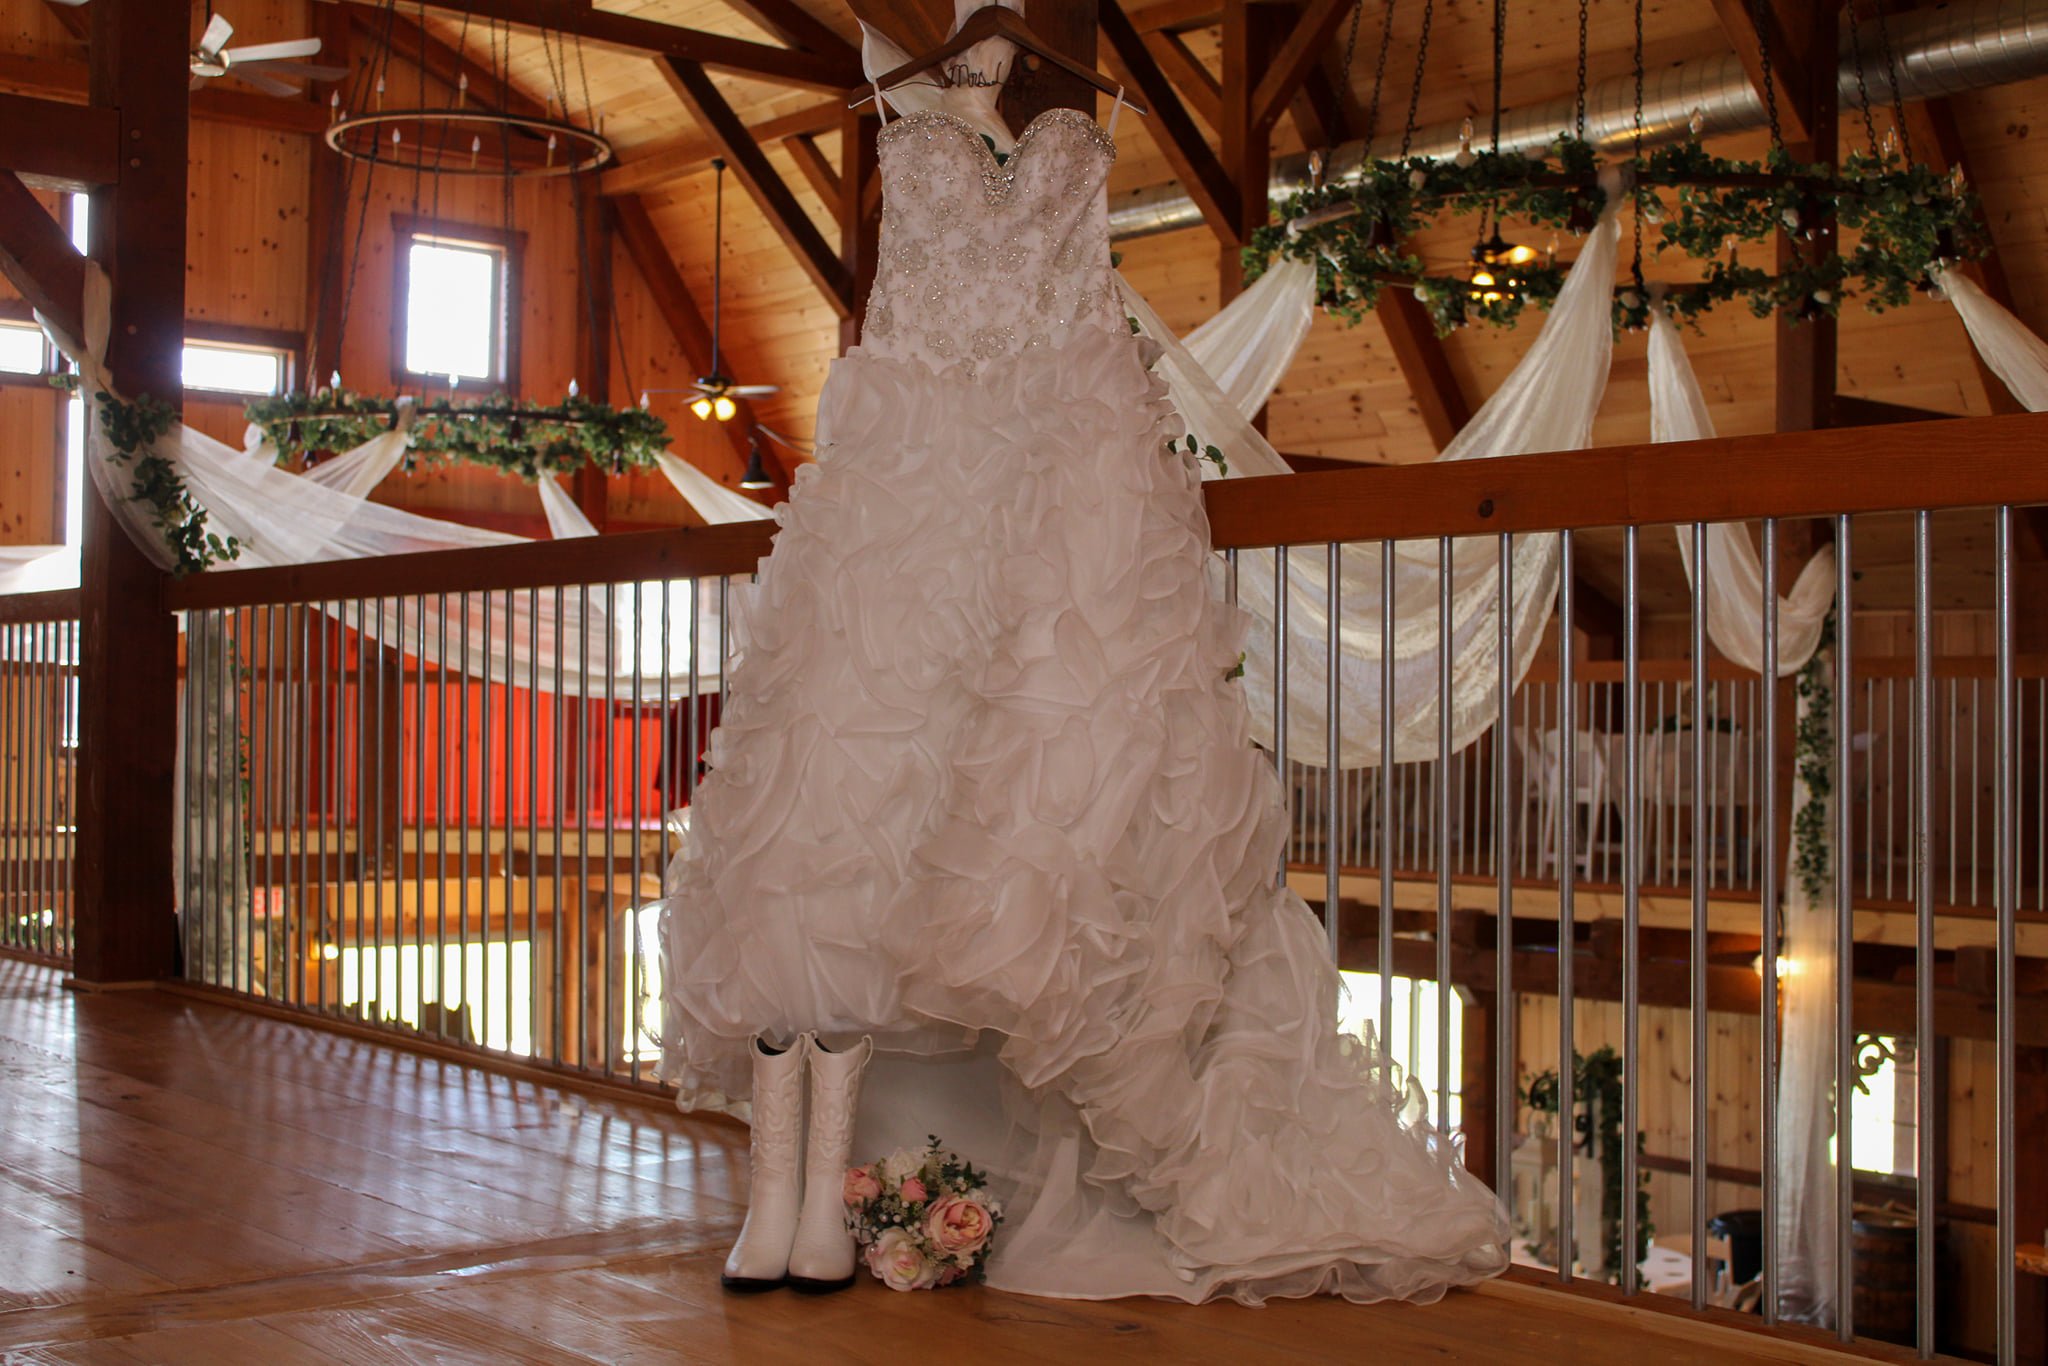 Curran.Lopez Wedding Dress in Barn.jpg